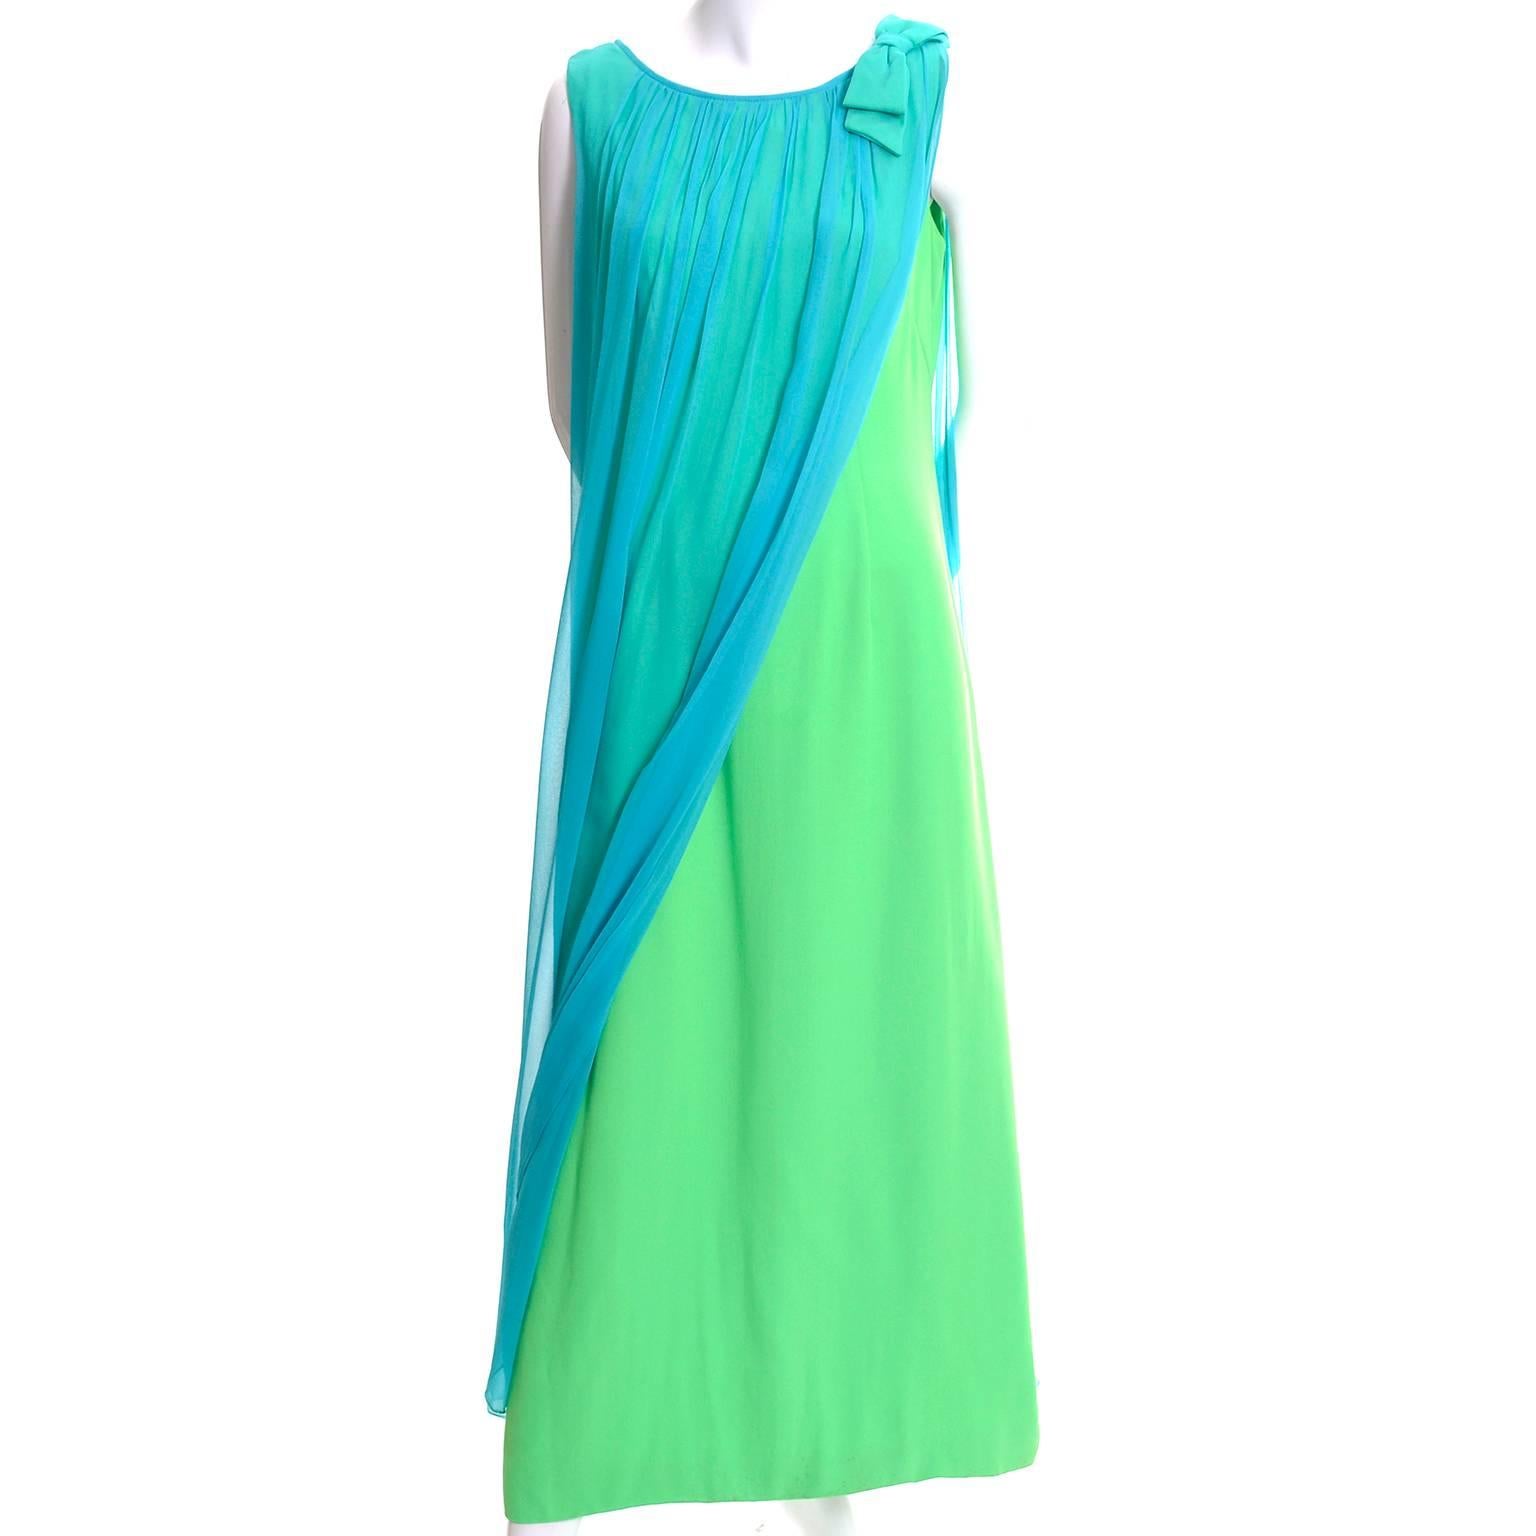 Women's 1960s Long Vintage Dress Flowing Aqua Blue Chiffon Green Satin Dress 6/8